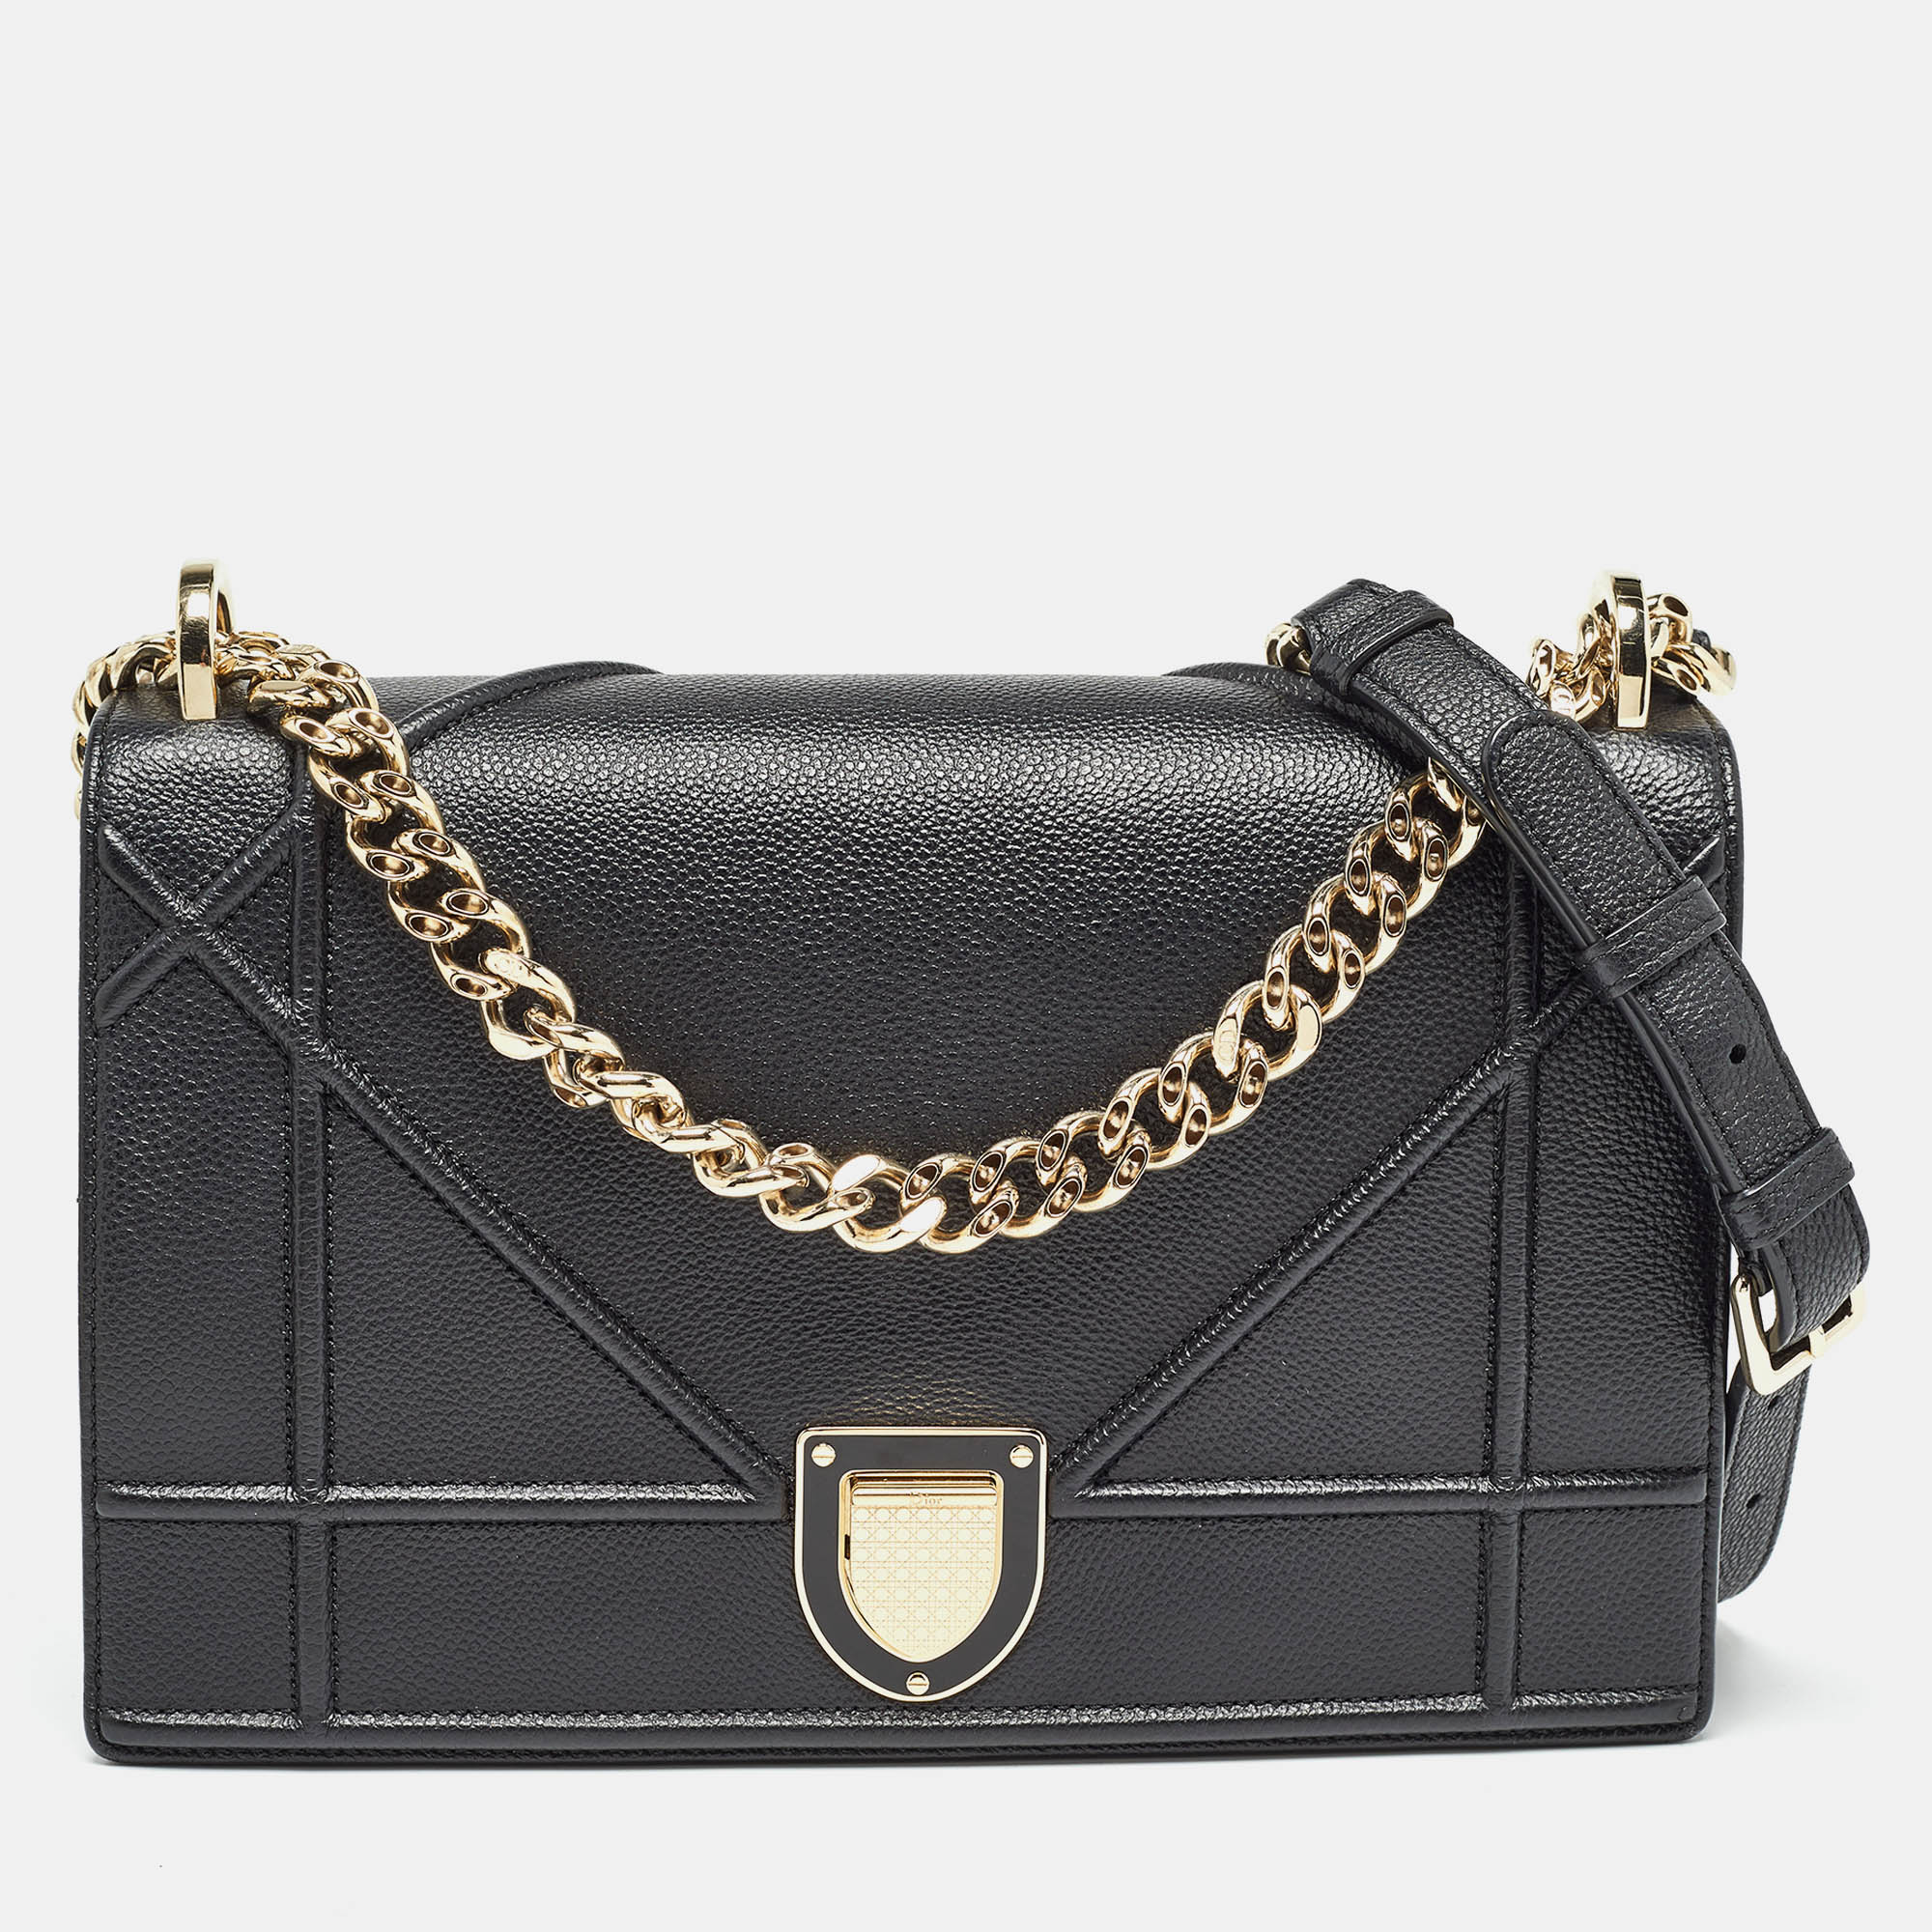 Dior black leather medium diorama shoulder bag